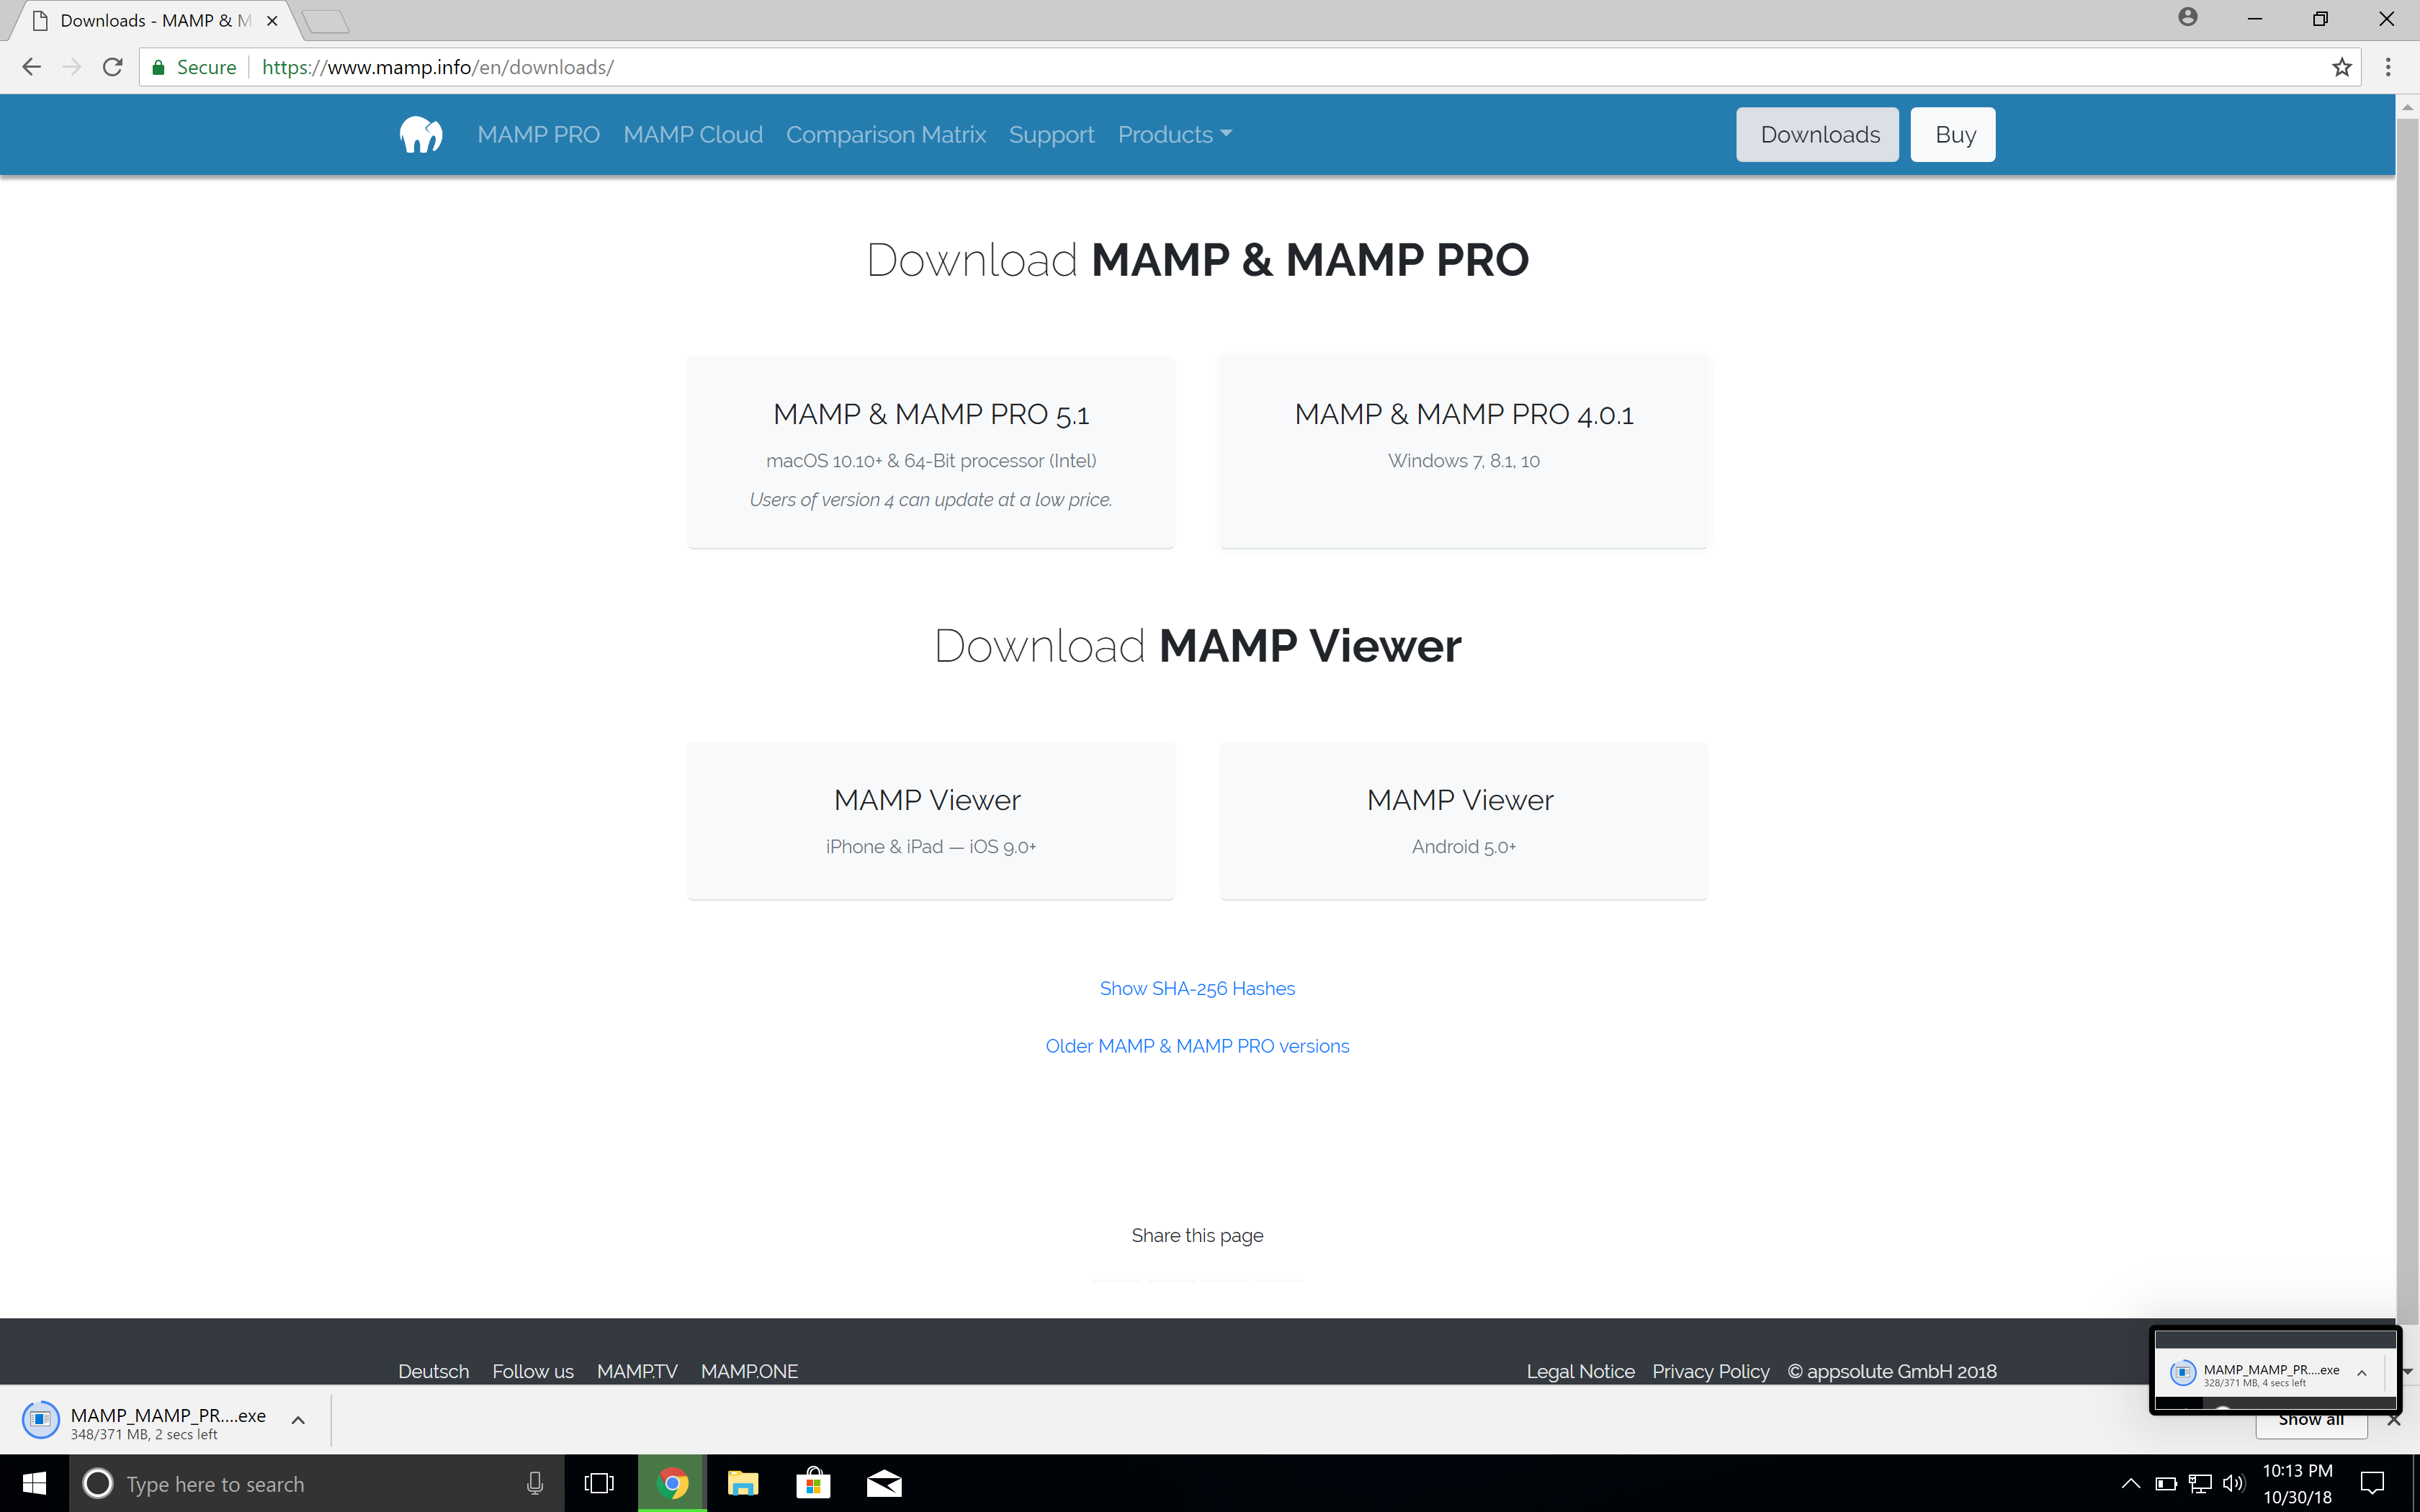 mamp pro start servers on restart